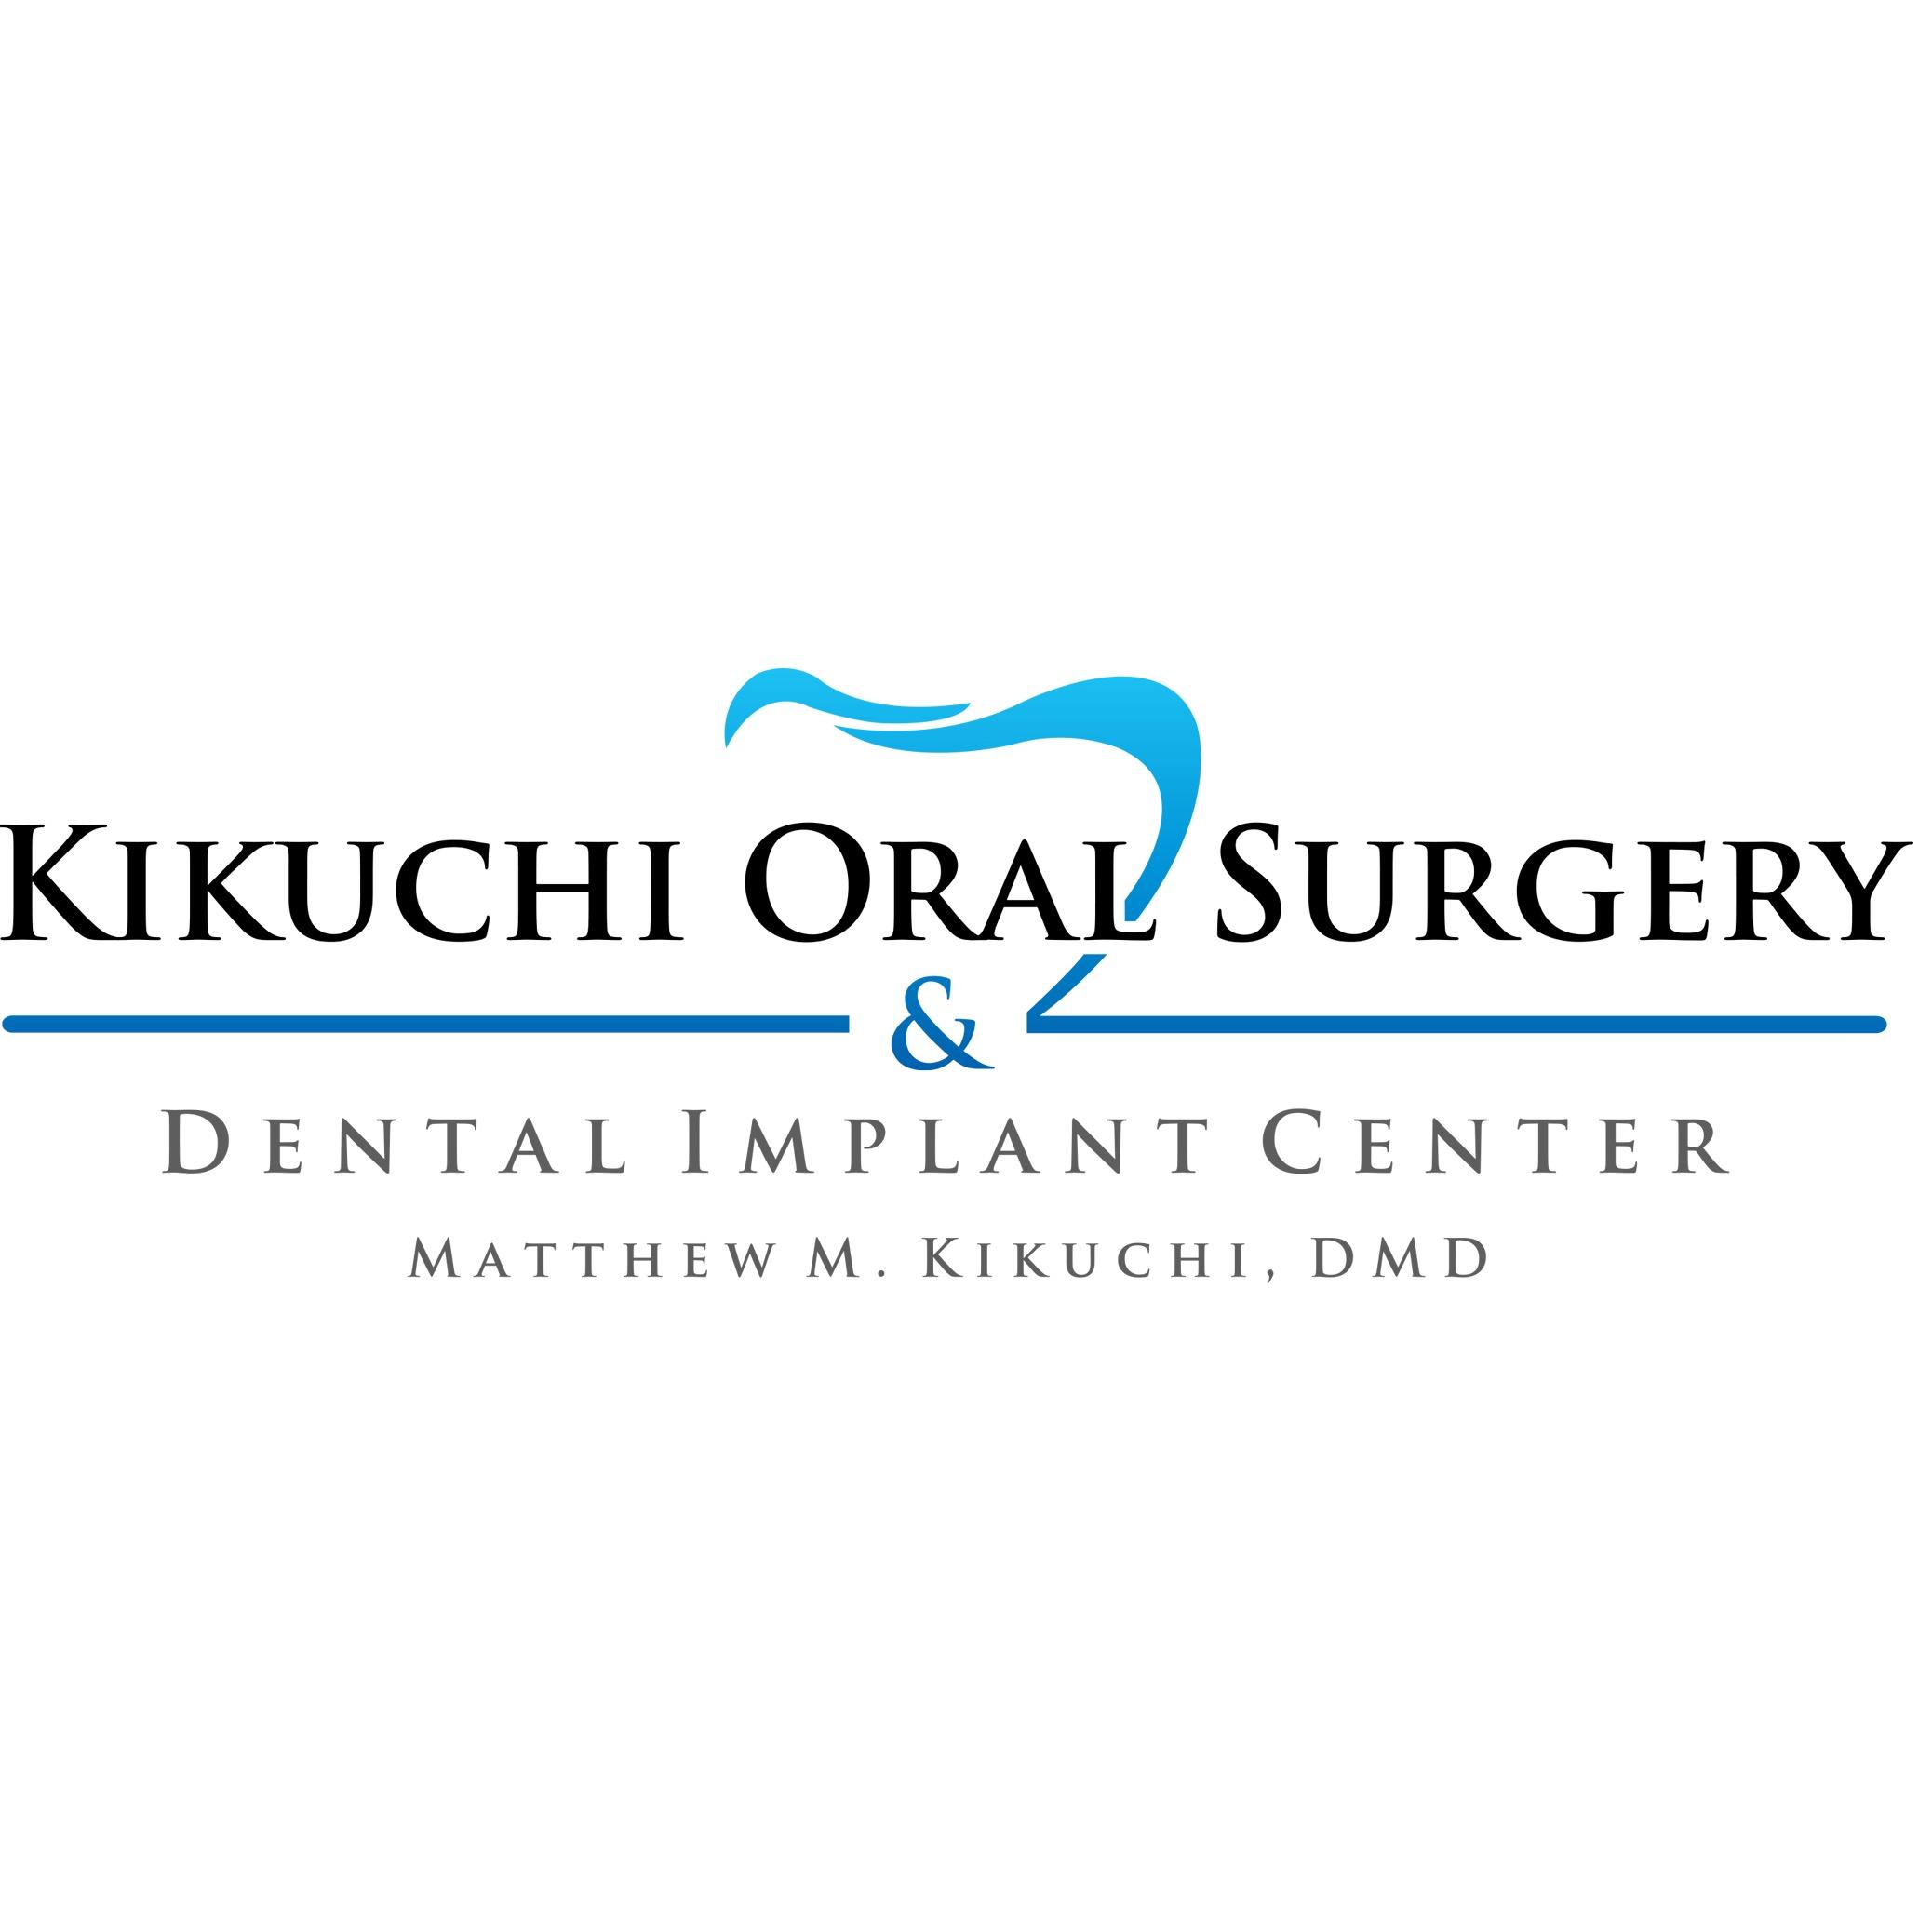 Kikuchi Oral Surgery & Dental Implant Center Photo